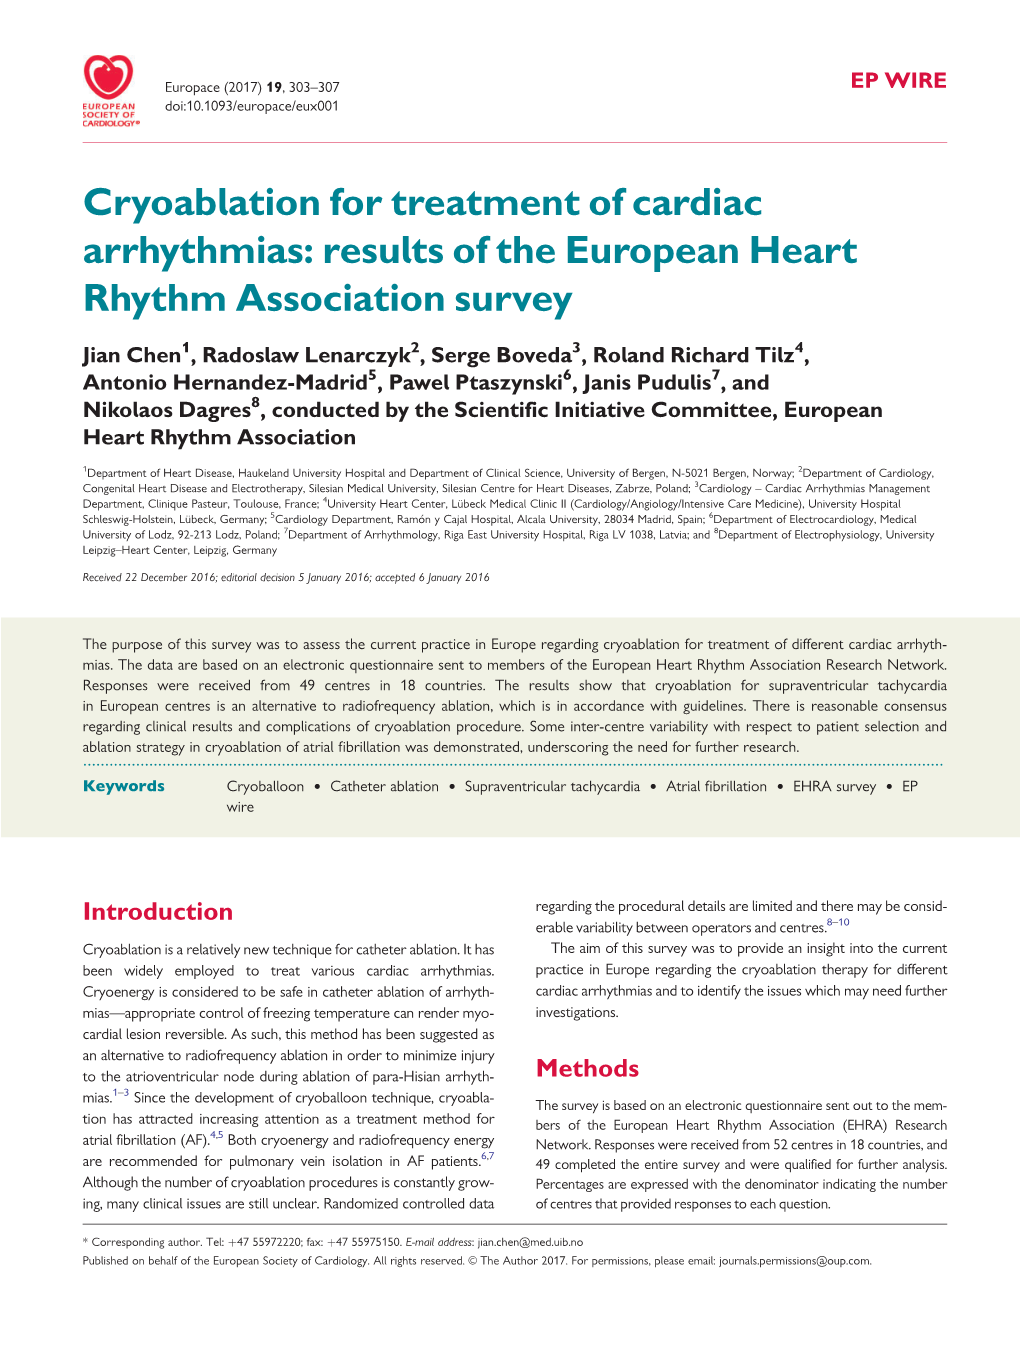 Cryoablation for Treatment of Cardiac Arrhythmias: Results of the European Heart Rhythm Association Survey